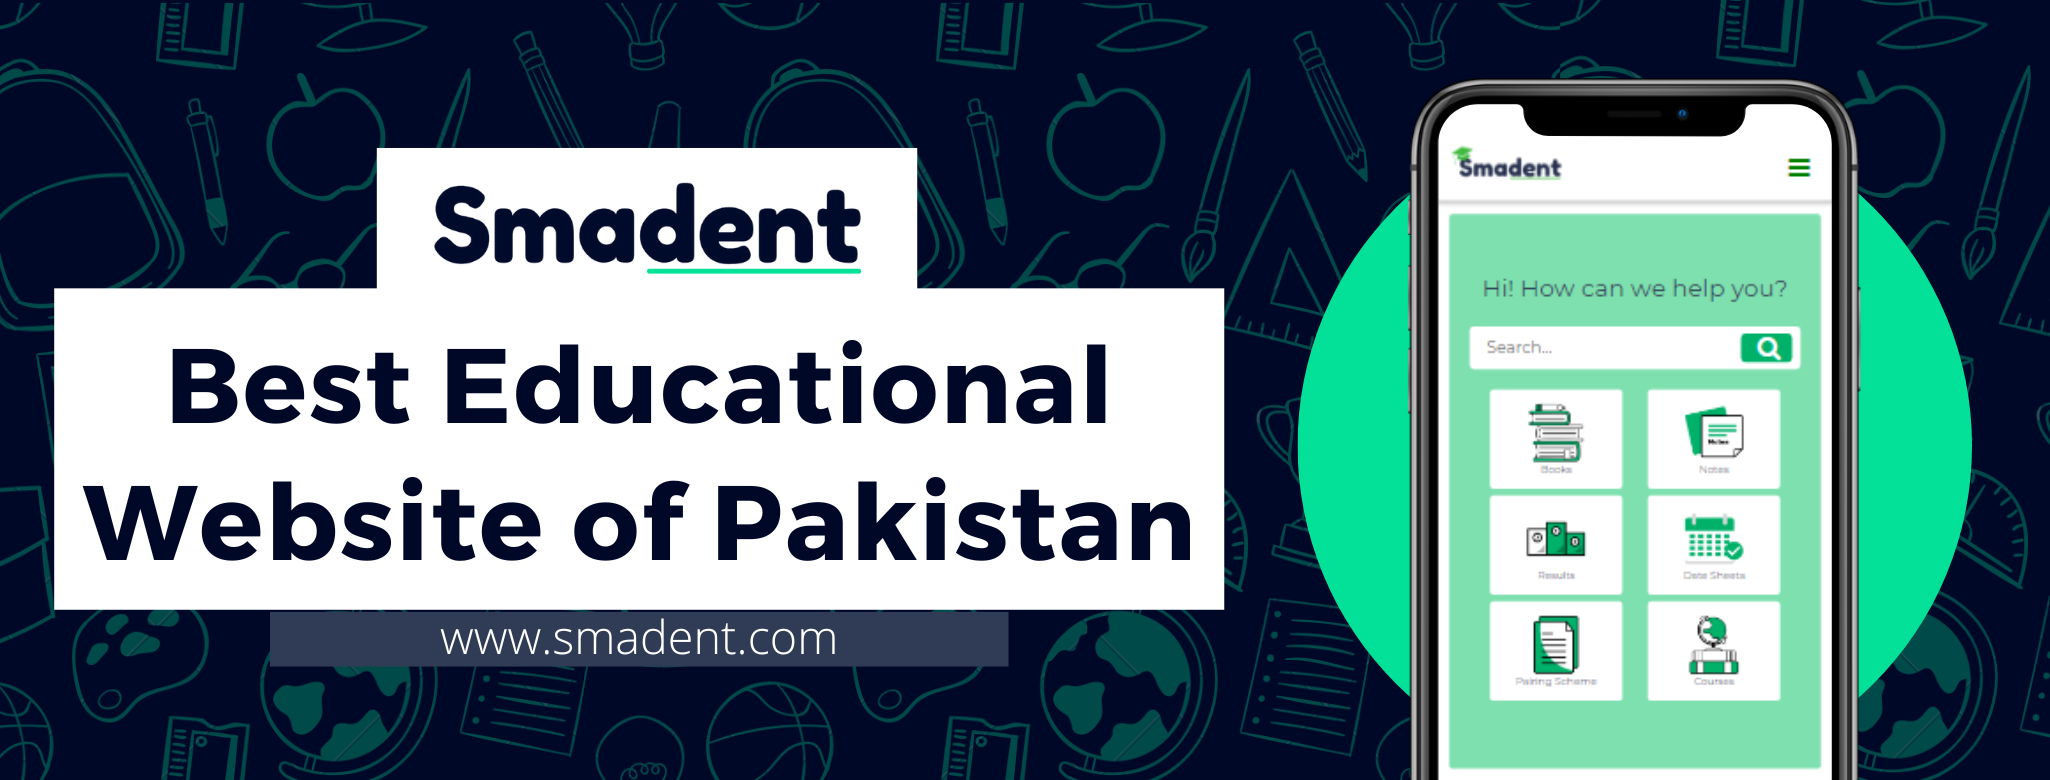 Best Educational website of Pakistan Smadent